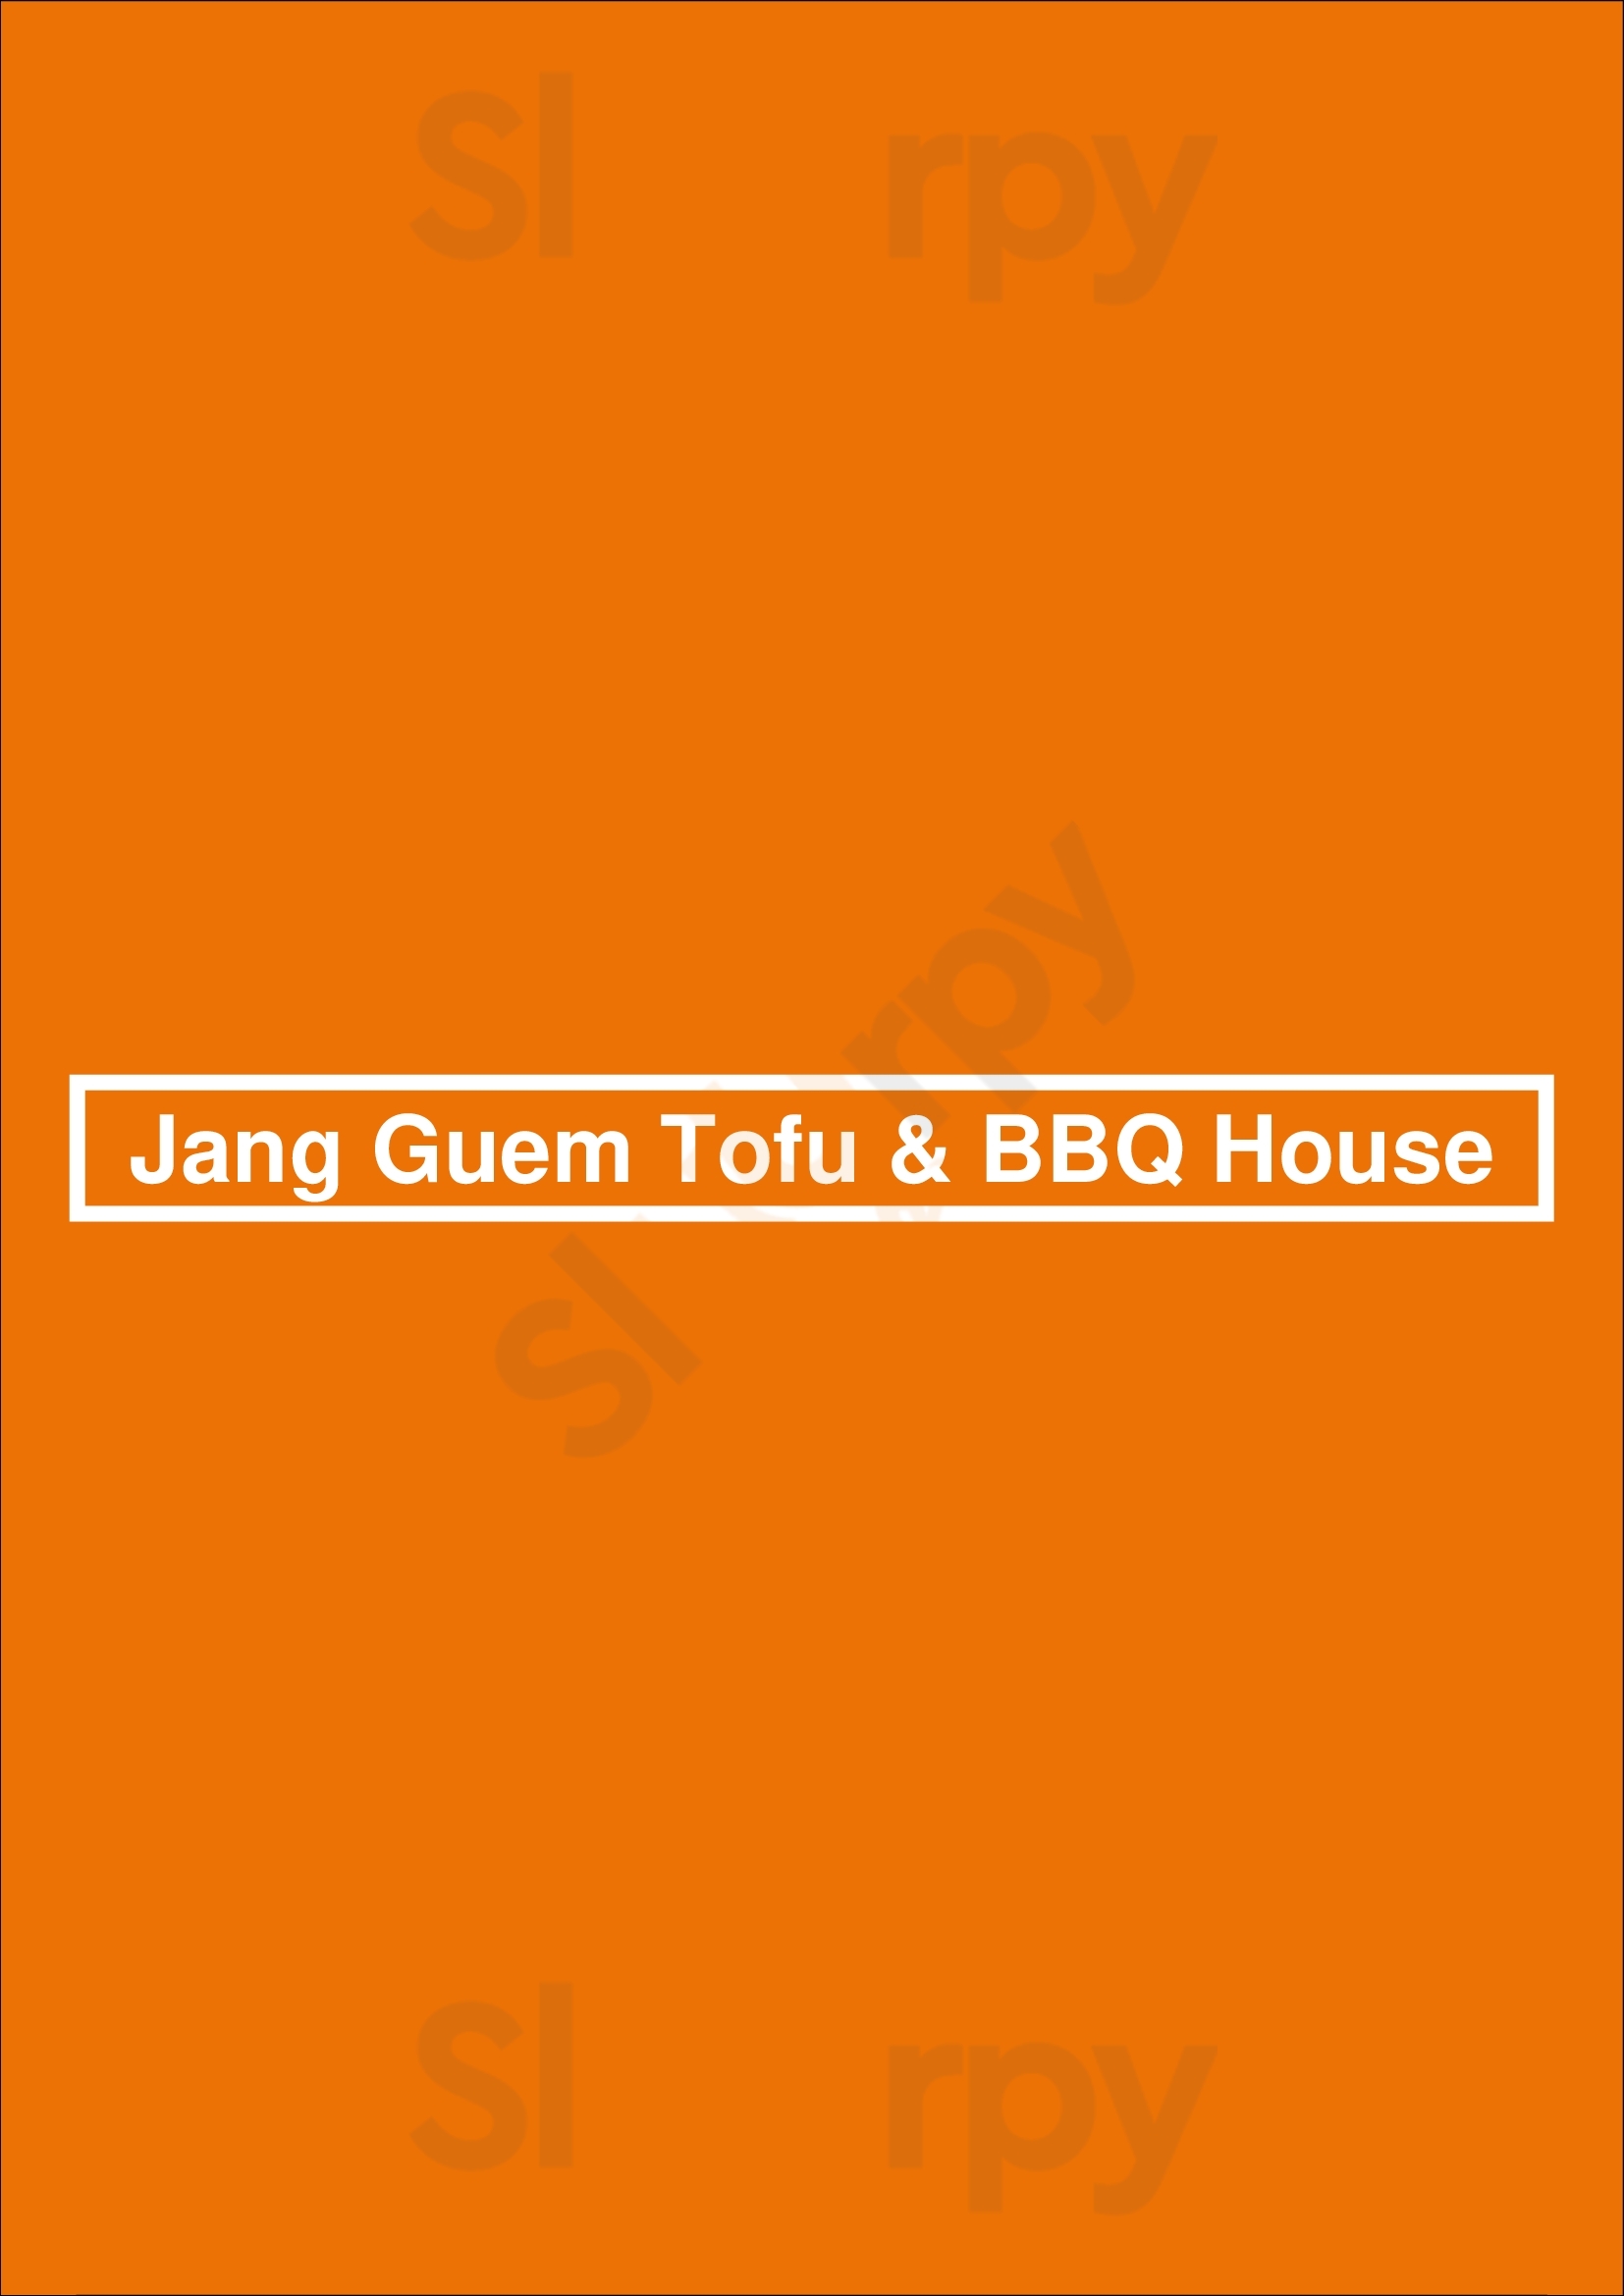 Jang Guem Tofu & Bbq House Houston Menu - 1